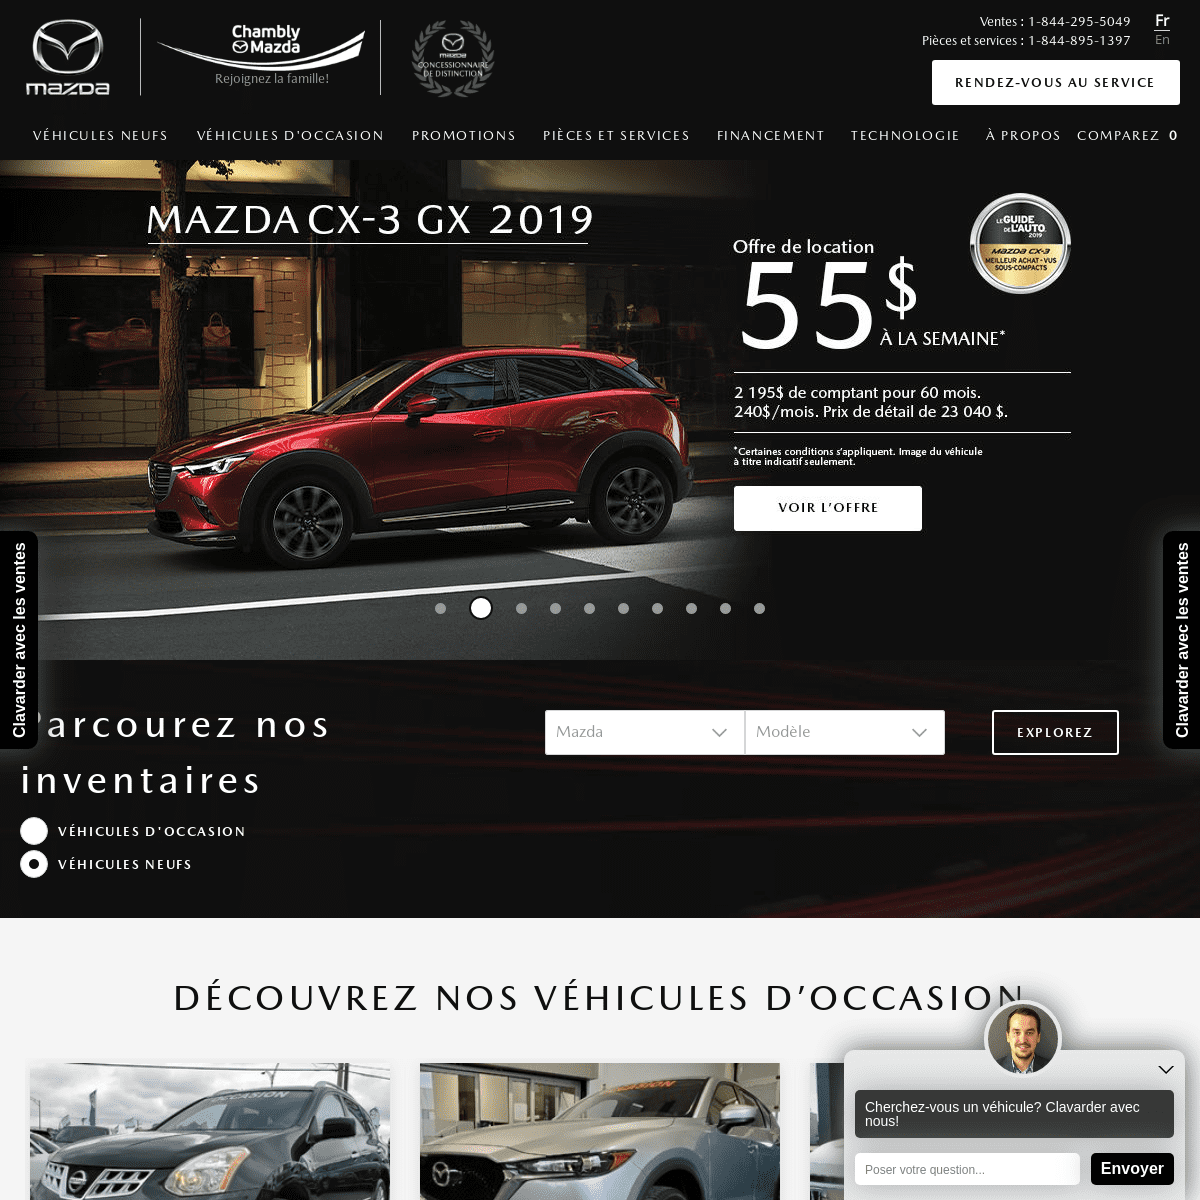 Chambly Mazda | Véhicules neufs et d'occasion à vendre